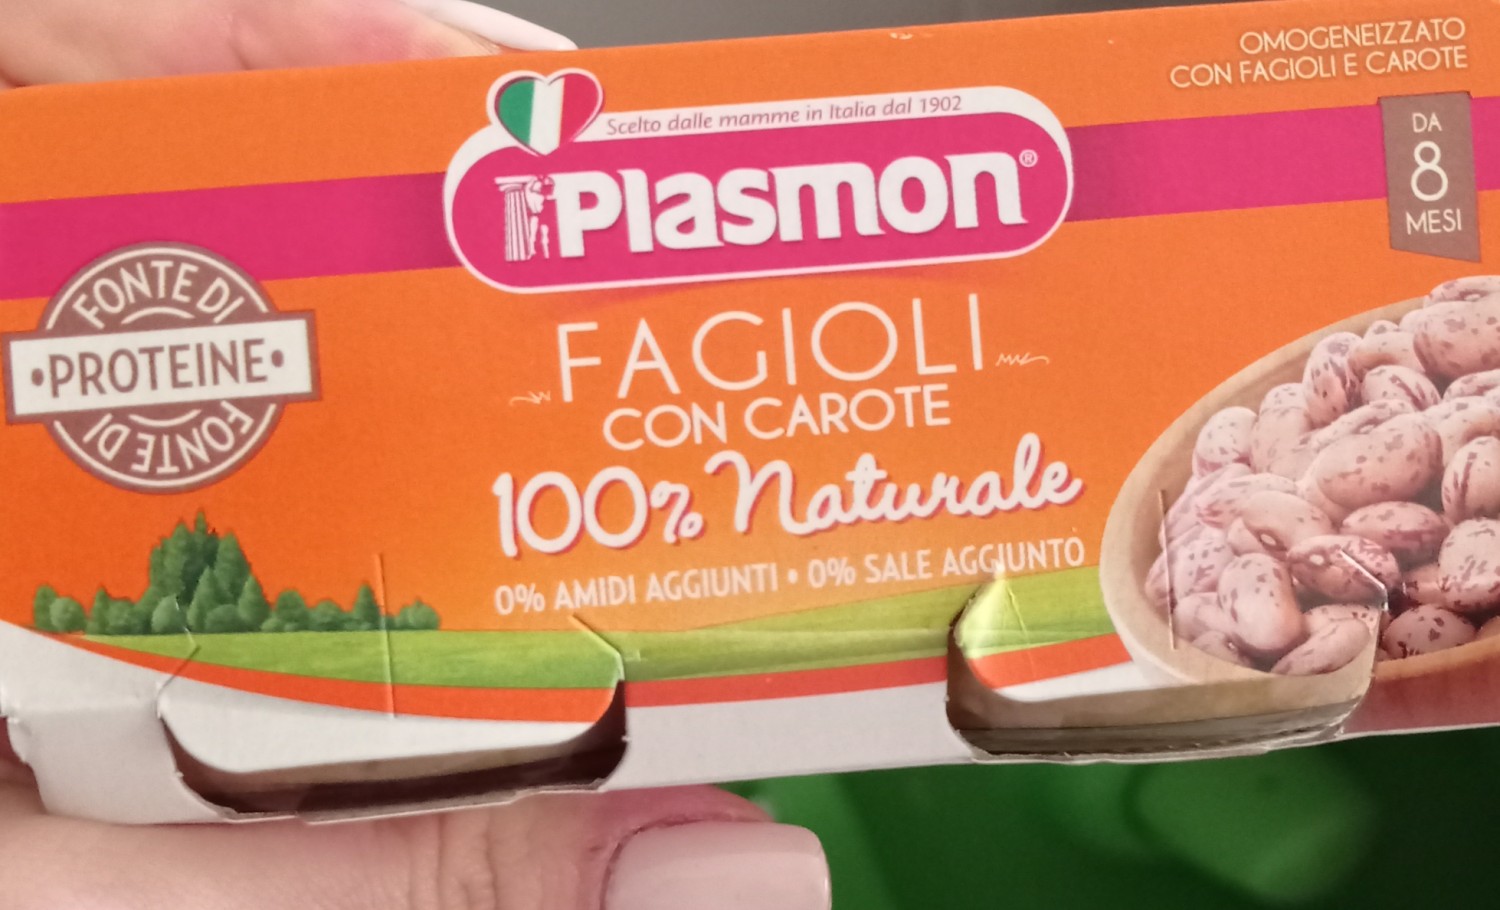 Plasmon Omogeneizzato Fagioli con Carote 8 Mesi - 2 x 80 gr - Vico Food Box